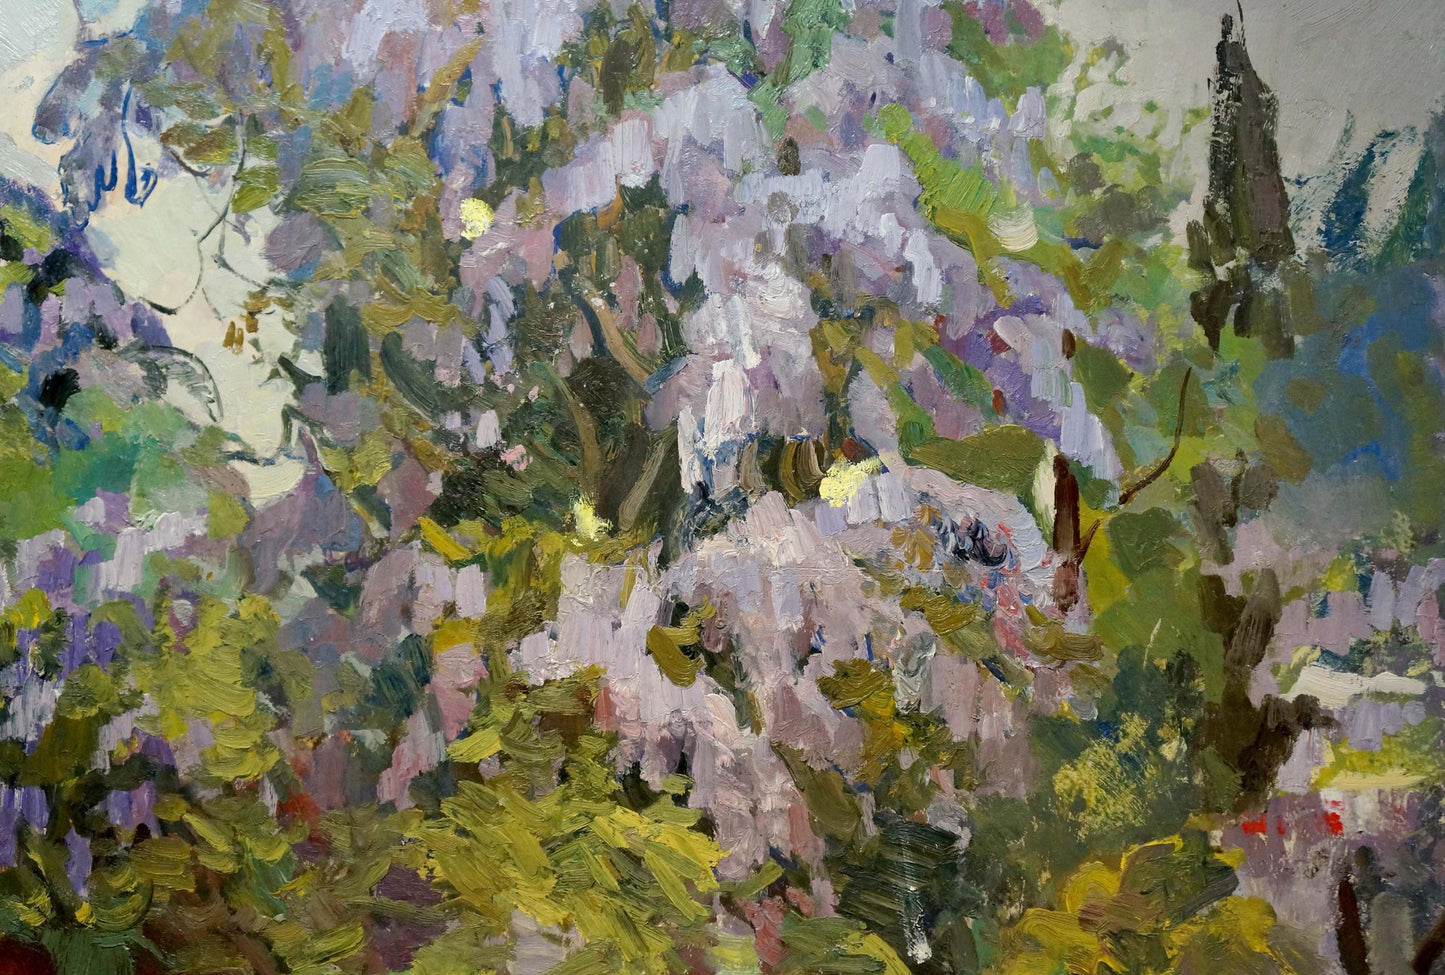 Oil painting "Flower Tree" by Babentsov, depicting vibrant floral abundance.